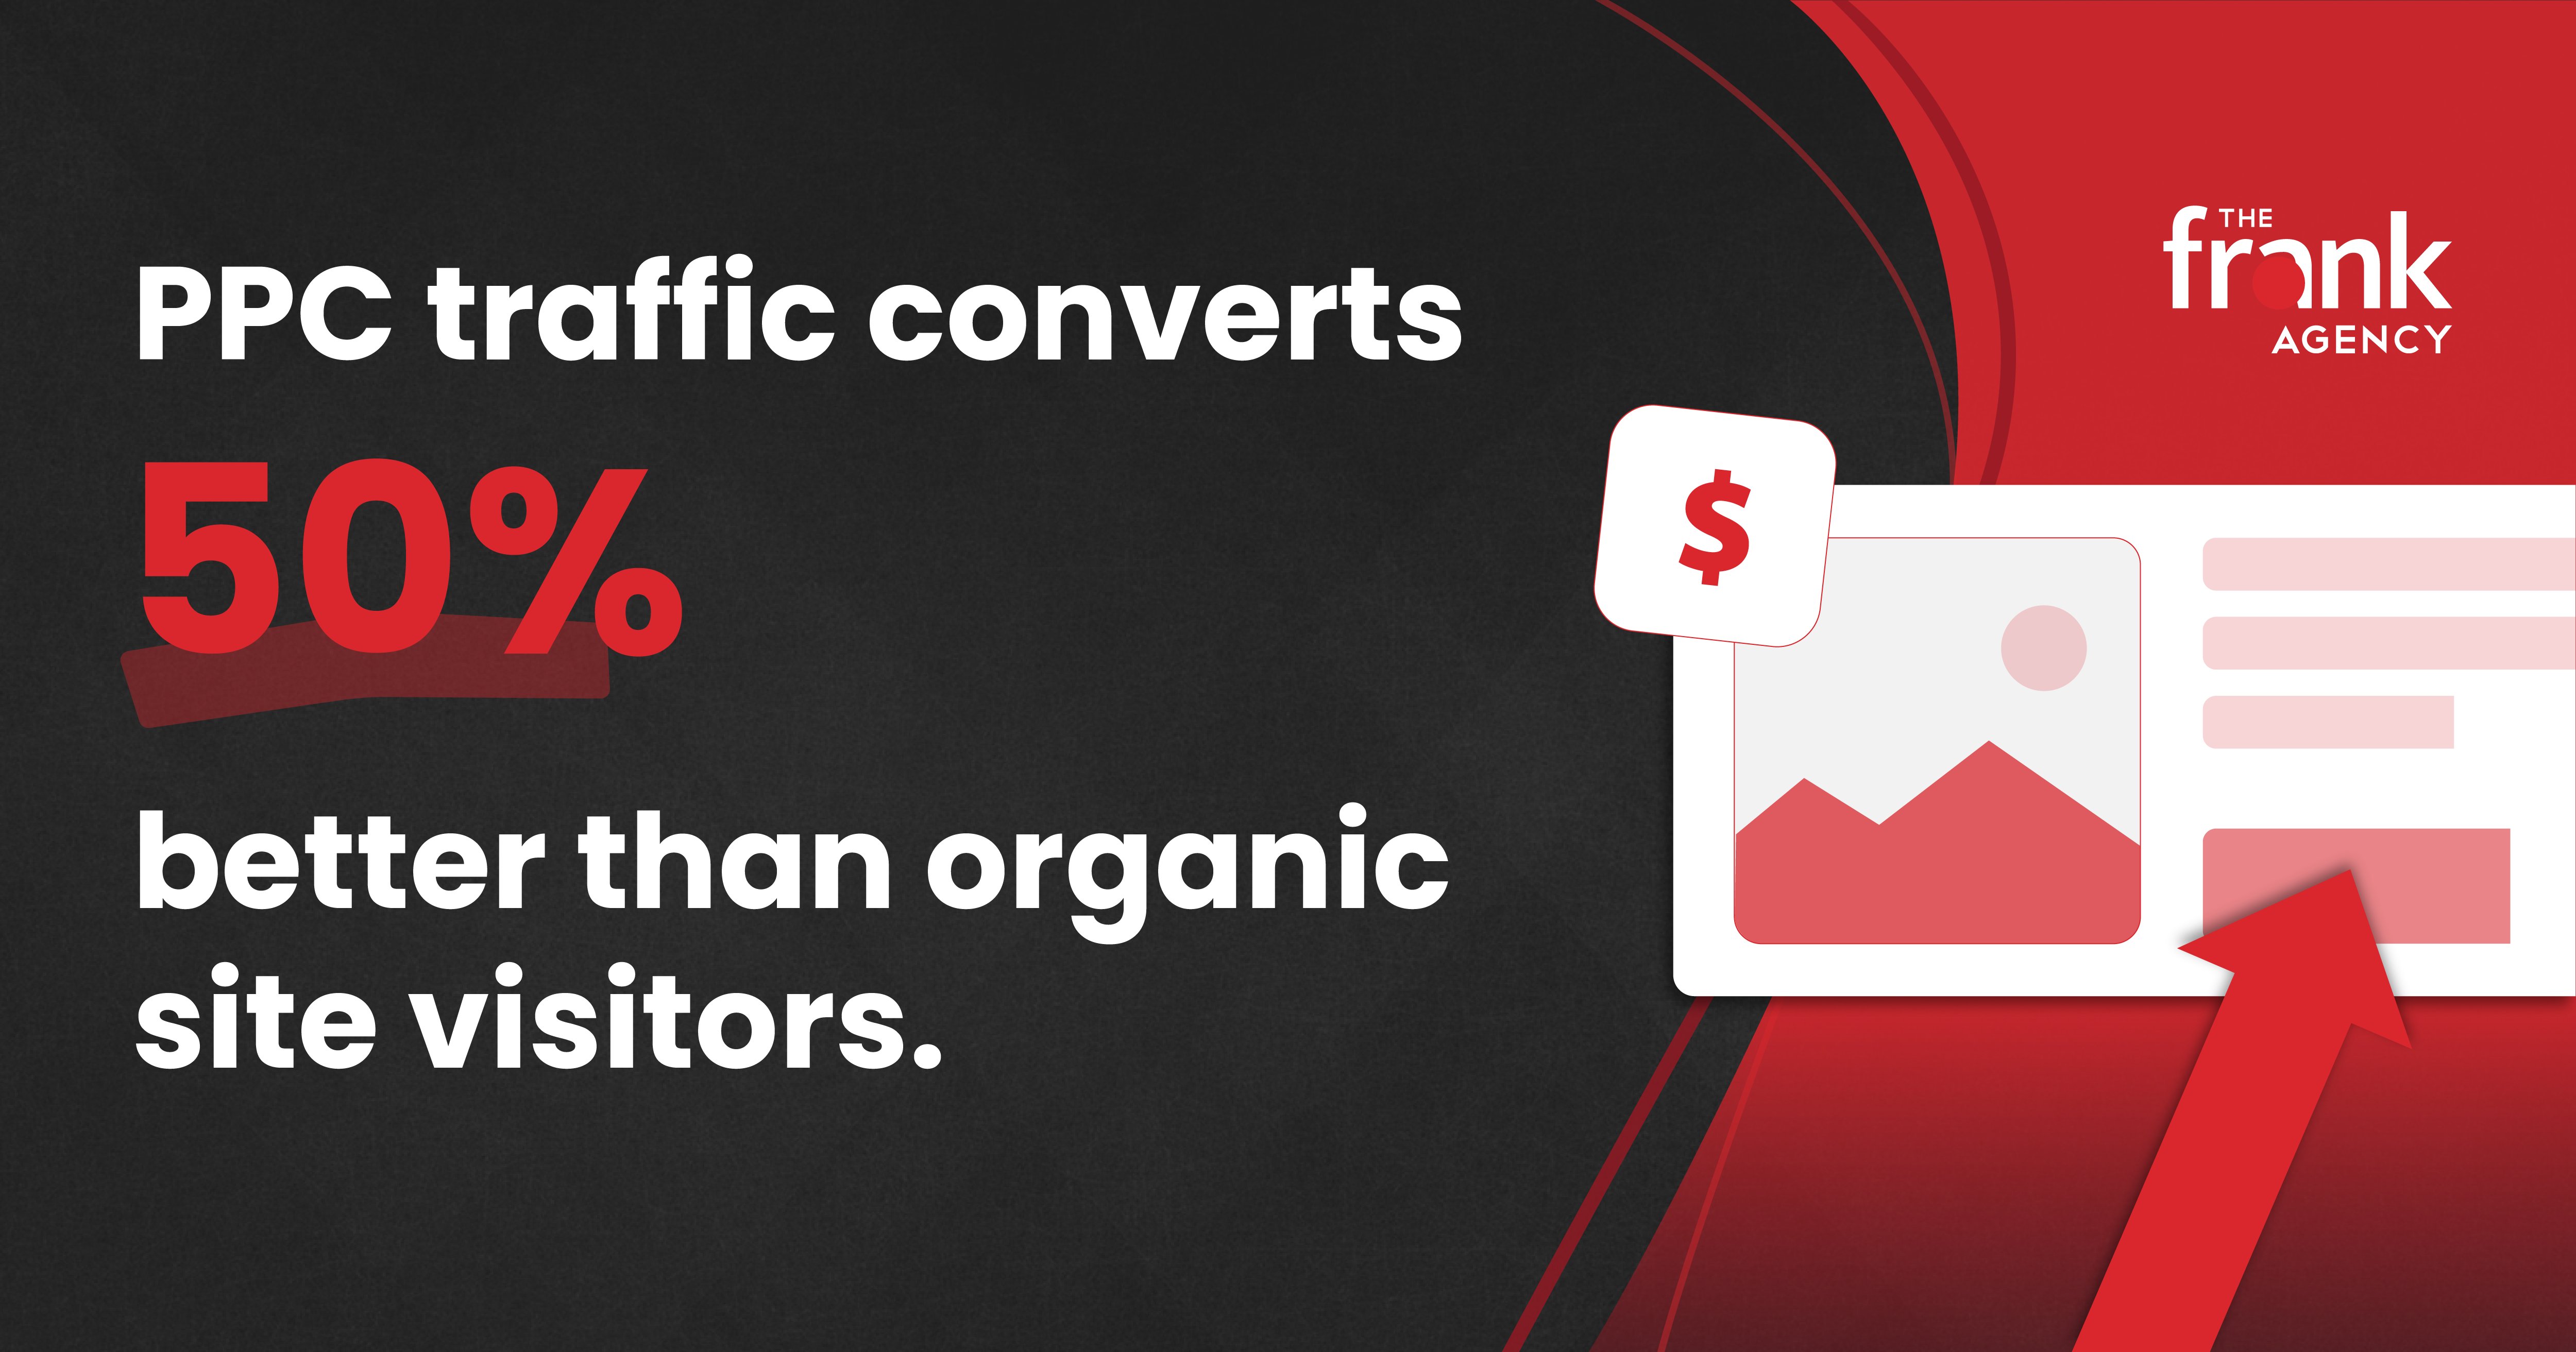 PPC has 50% more conversions than organic